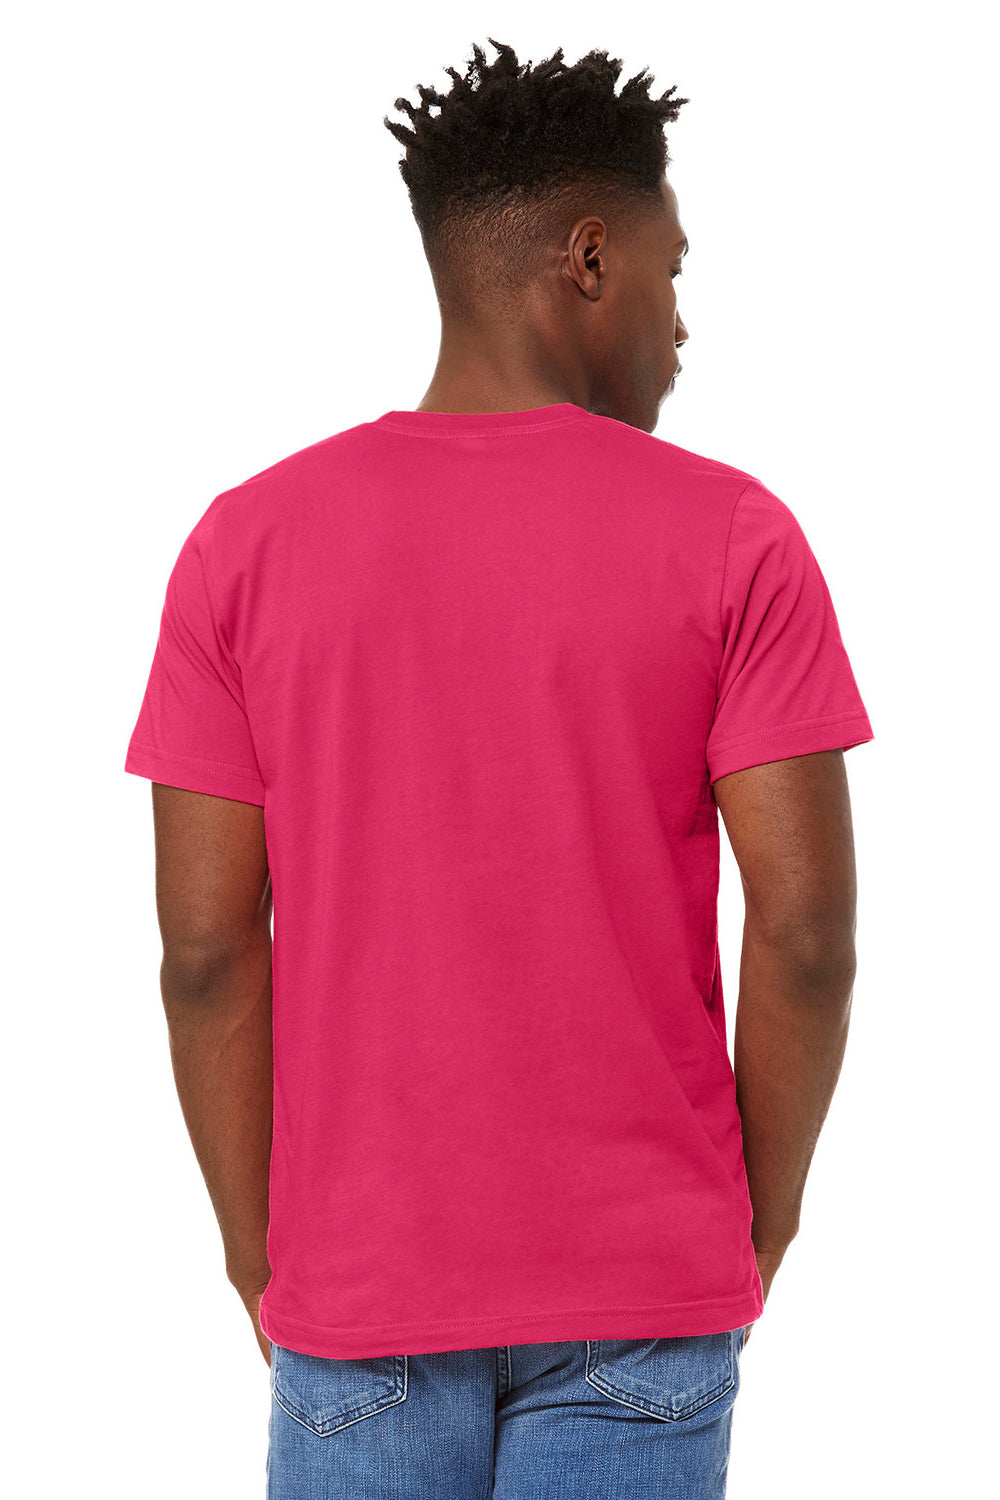 Bella + Canvas BC3001/3001C Mens Jersey Short Sleeve Crewneck T-Shirt Fuchsia Pink Model Back